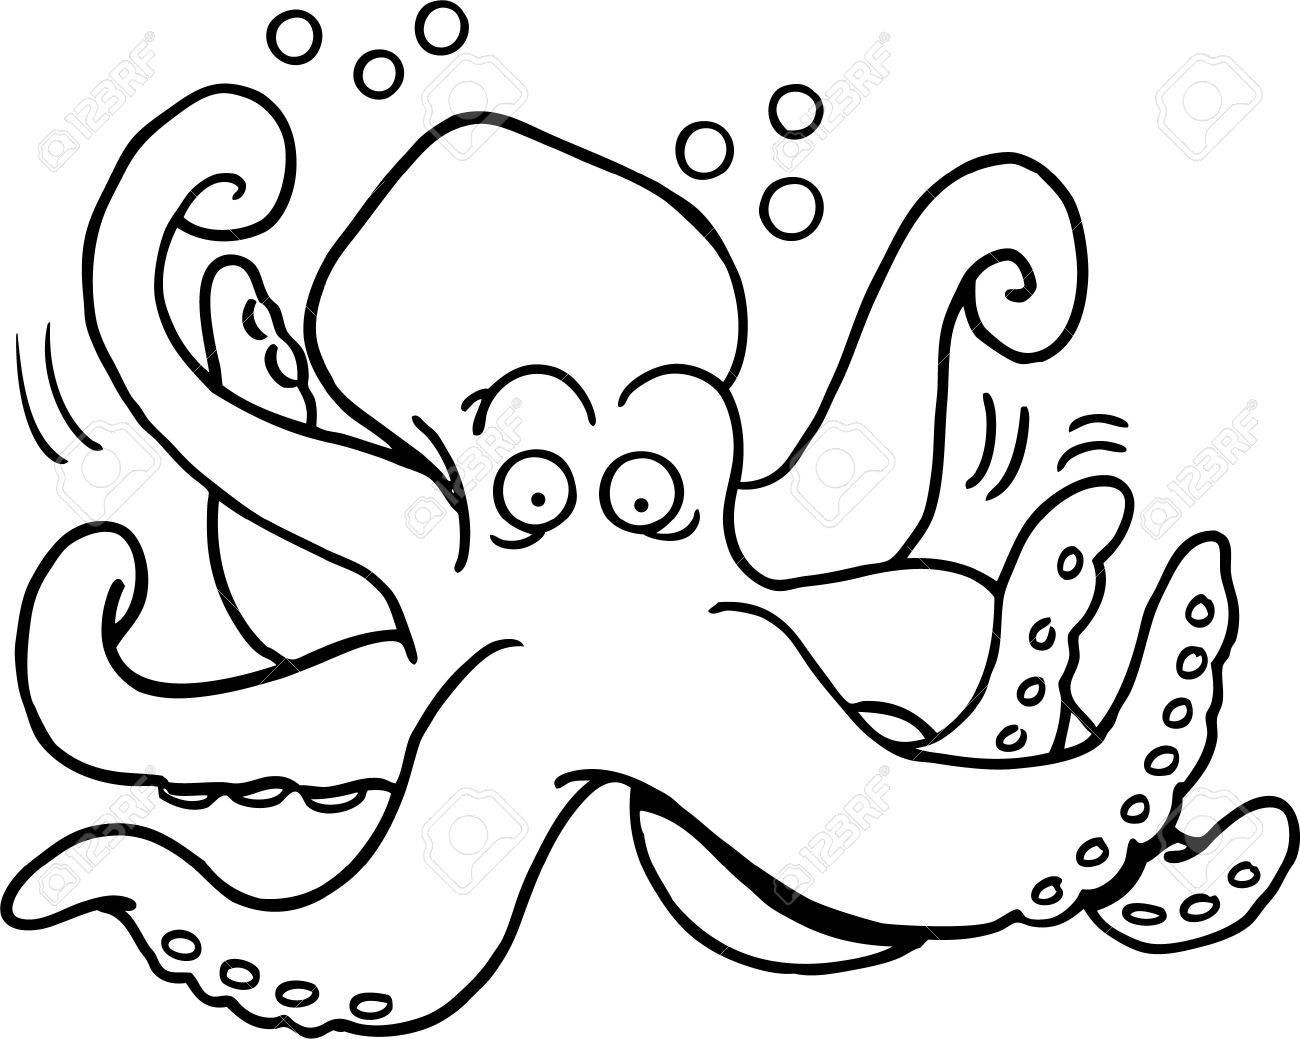 Octopus clipart black.